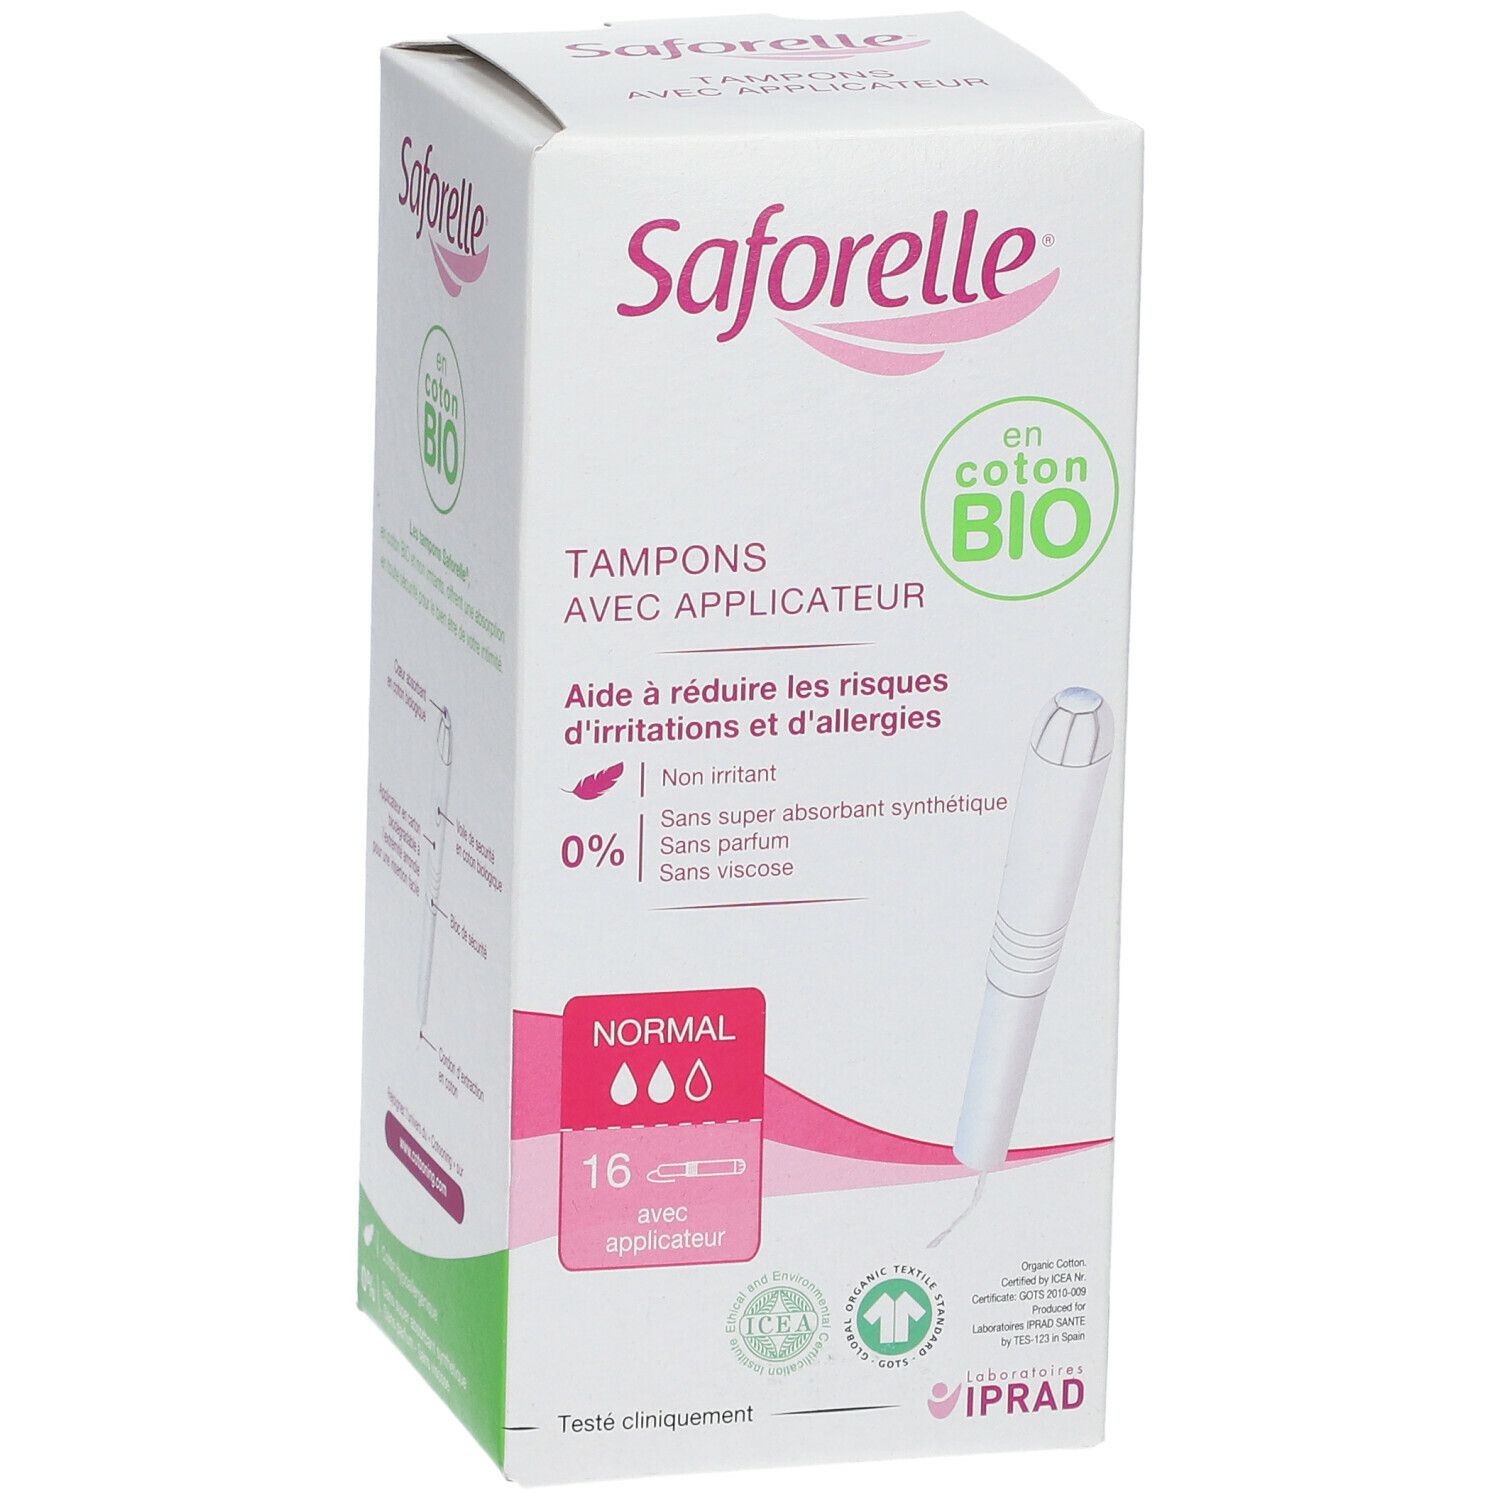 Saforelle® Tampon avec applicateur Coton BIO